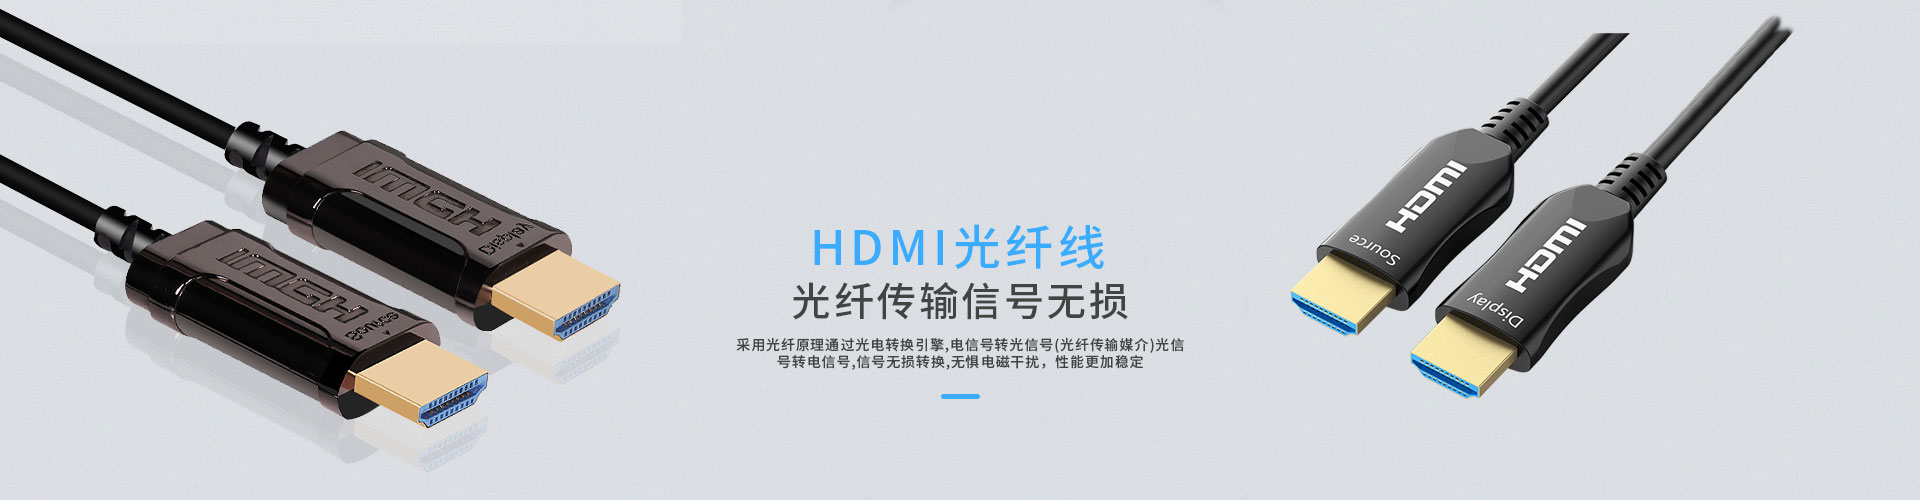 hgα030皇冠HDMI